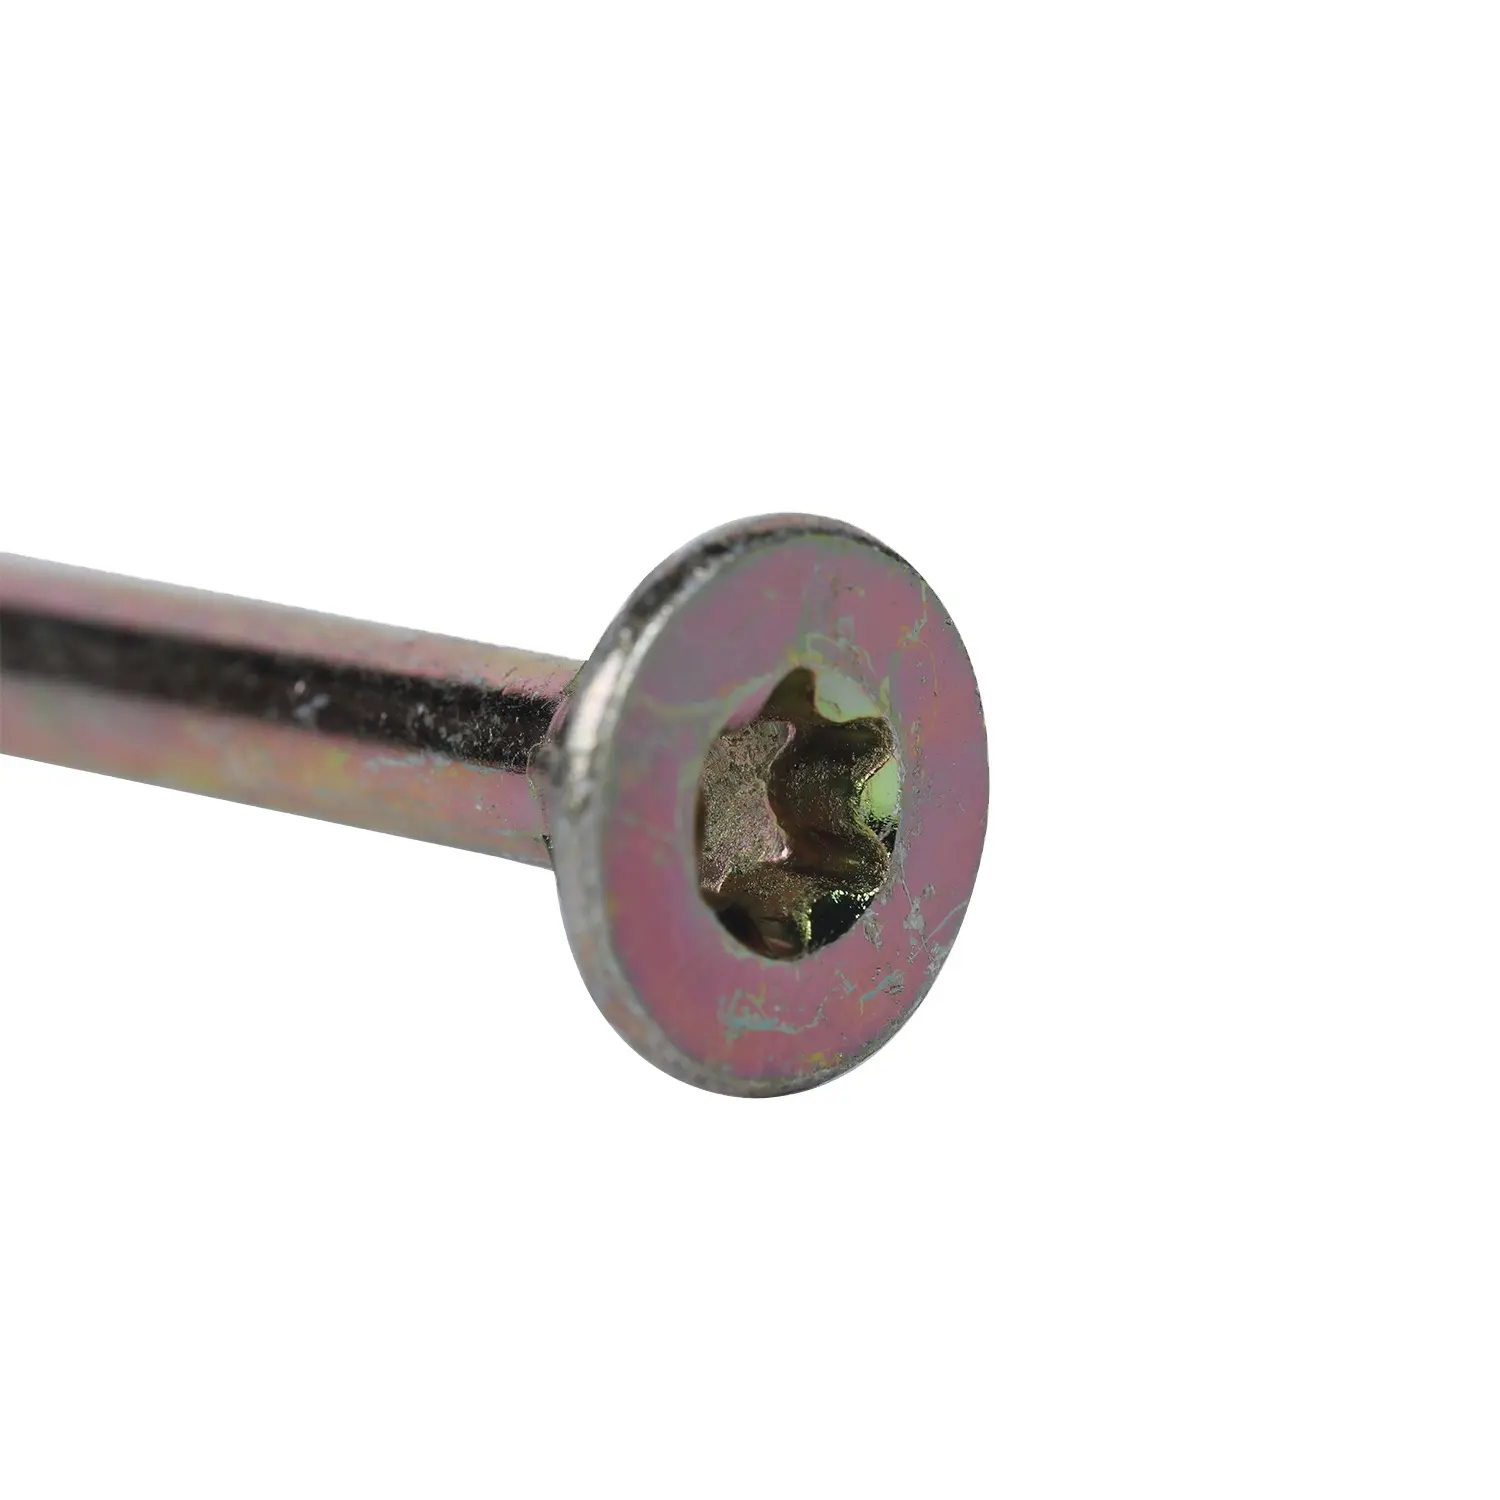 torx screw bolt for wooden construction round allen head washer head decking timber wood screws